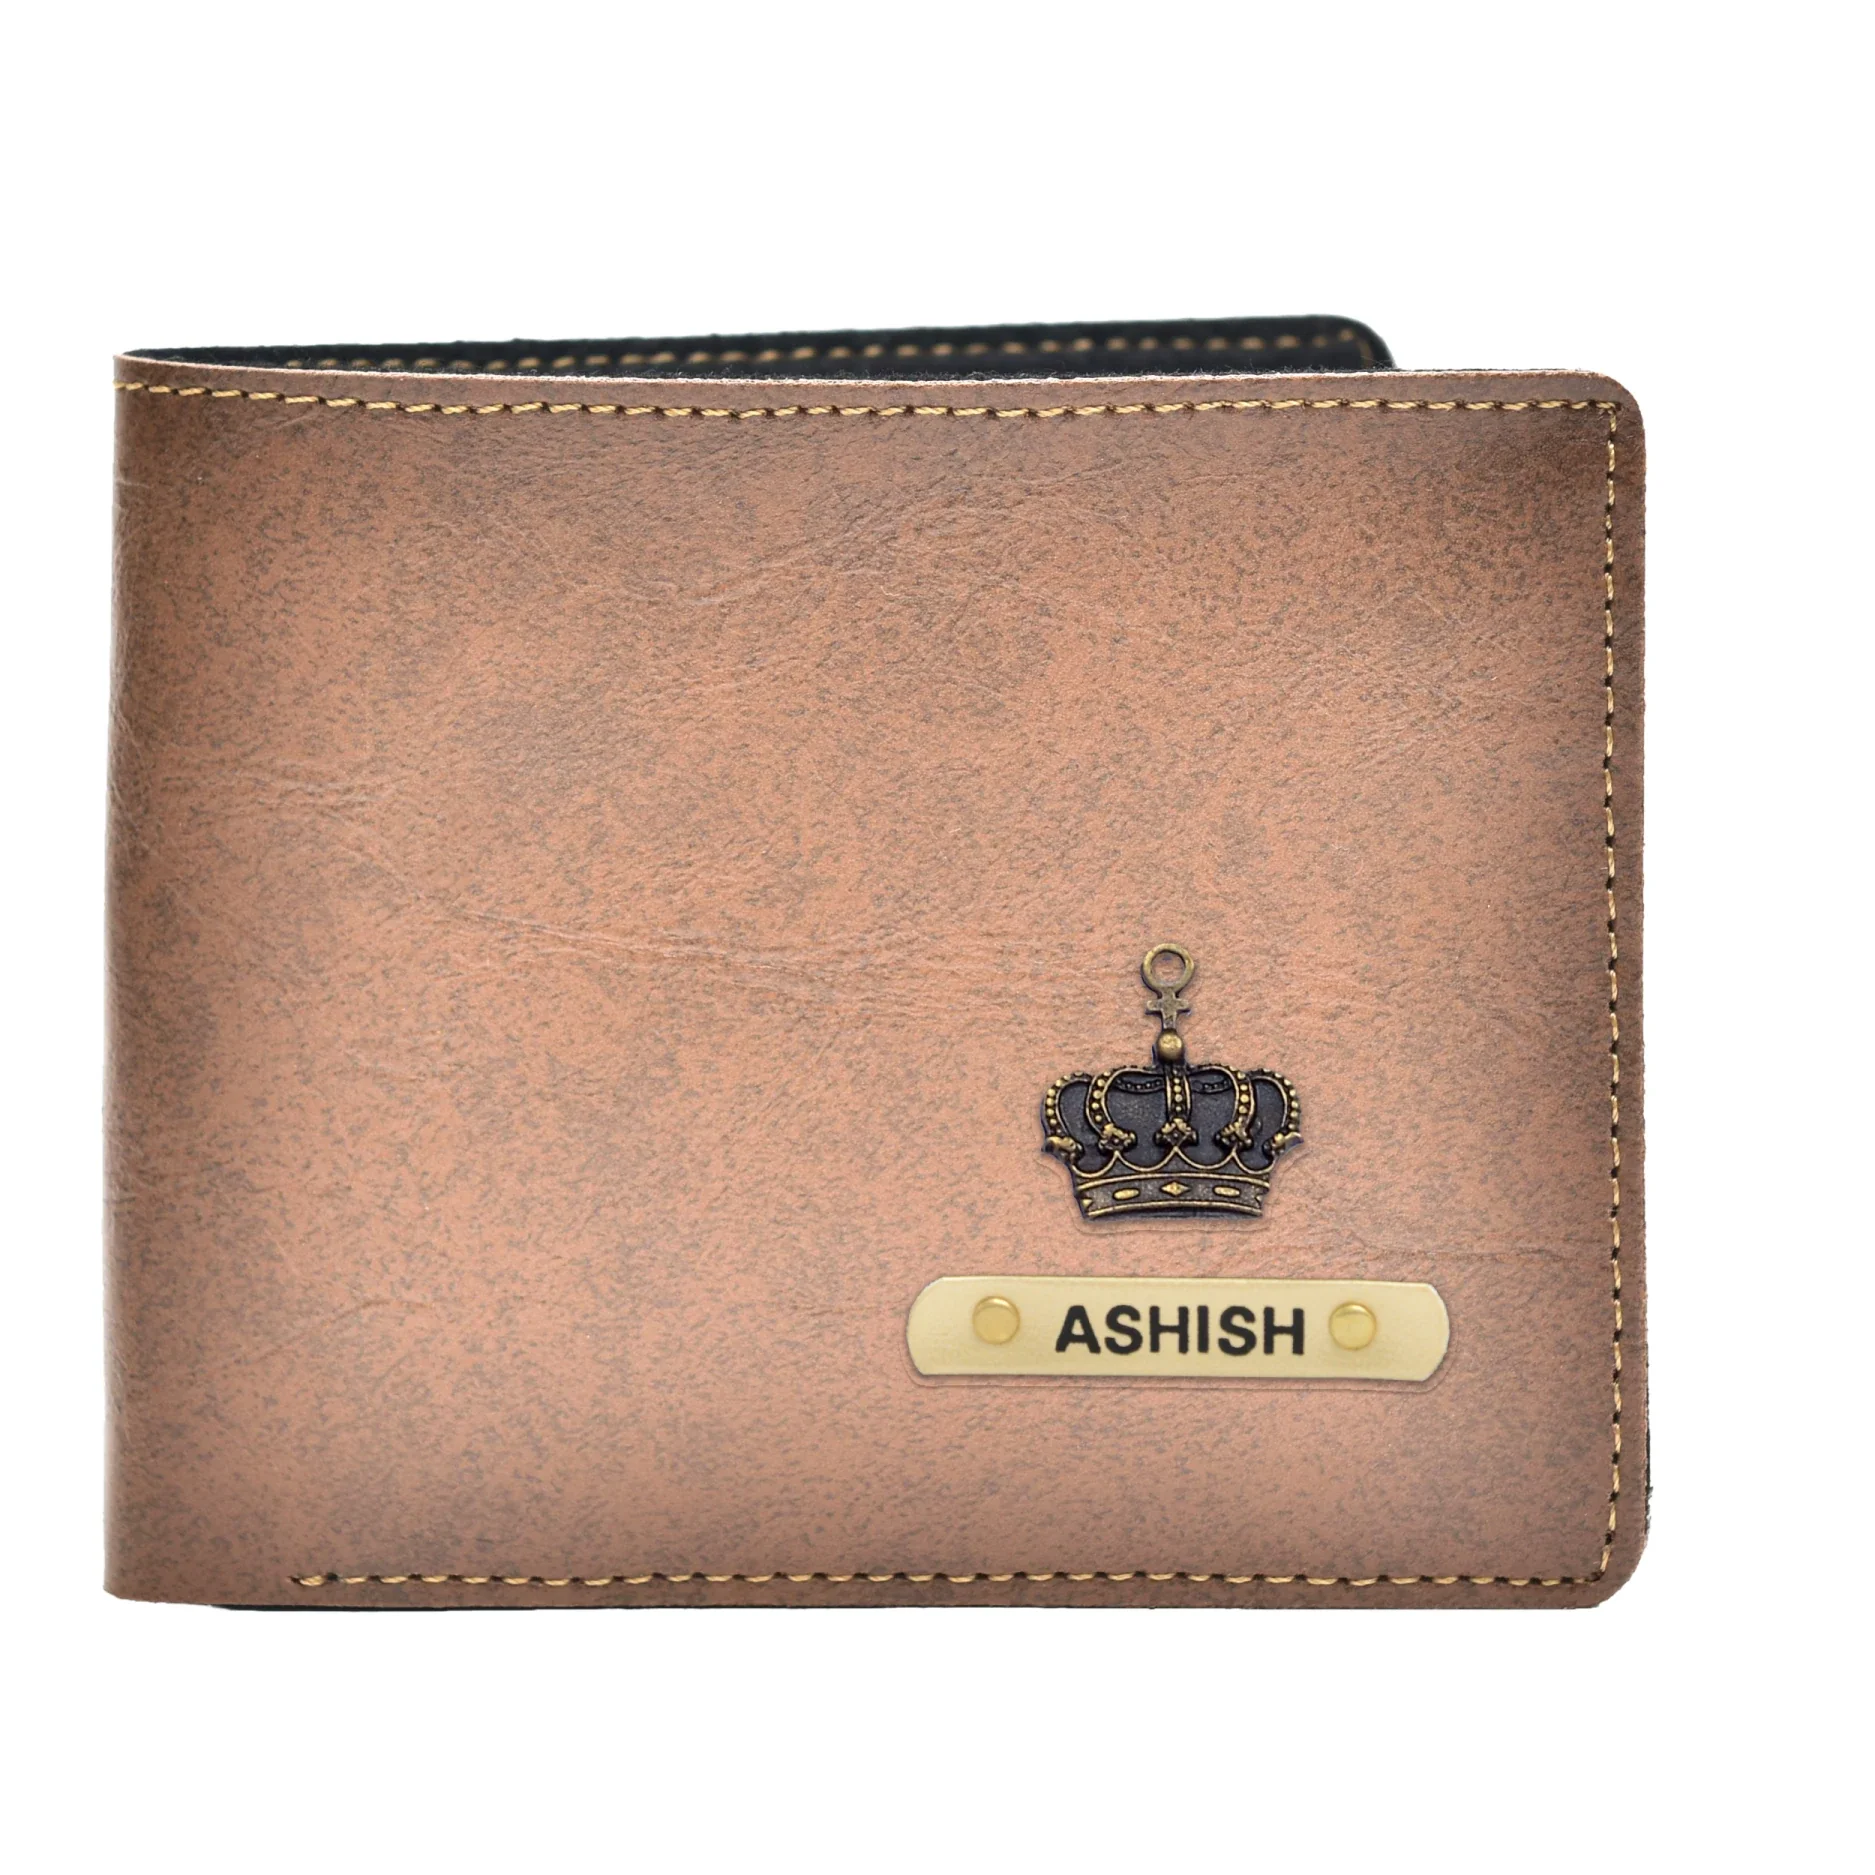 Buy Husk N Hoof RFID Protected Leather Wallet for Men | Mens Wallet Leather  | Wallets for Men | Purse for Men | Crunch Brown at Amazon.in